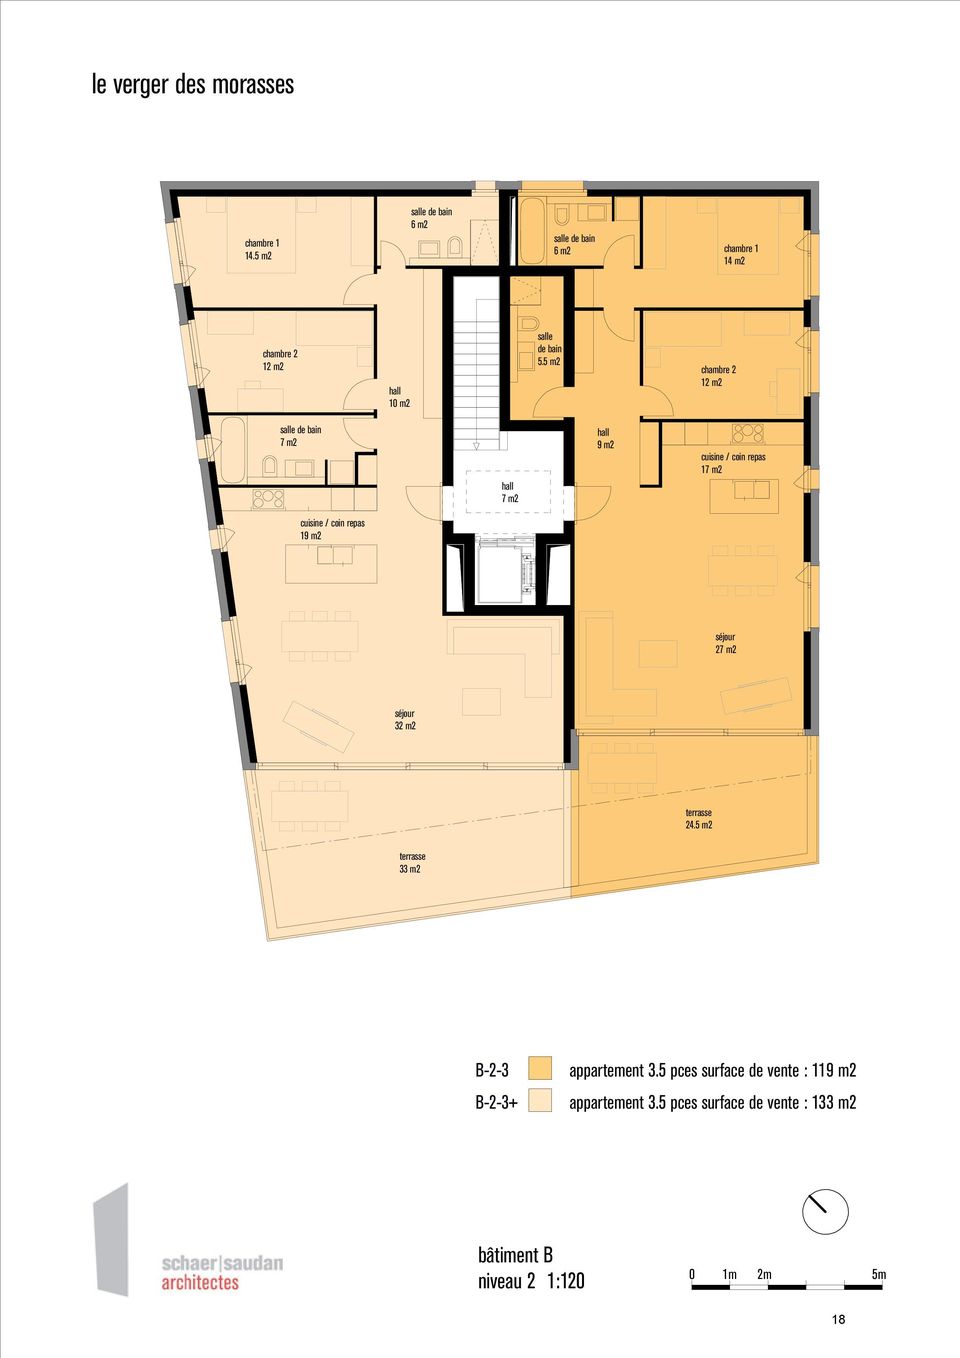 19 m2 27 m2 32 m2 24.5 m2 33 m2-2-3-2-3+ appartement 3.